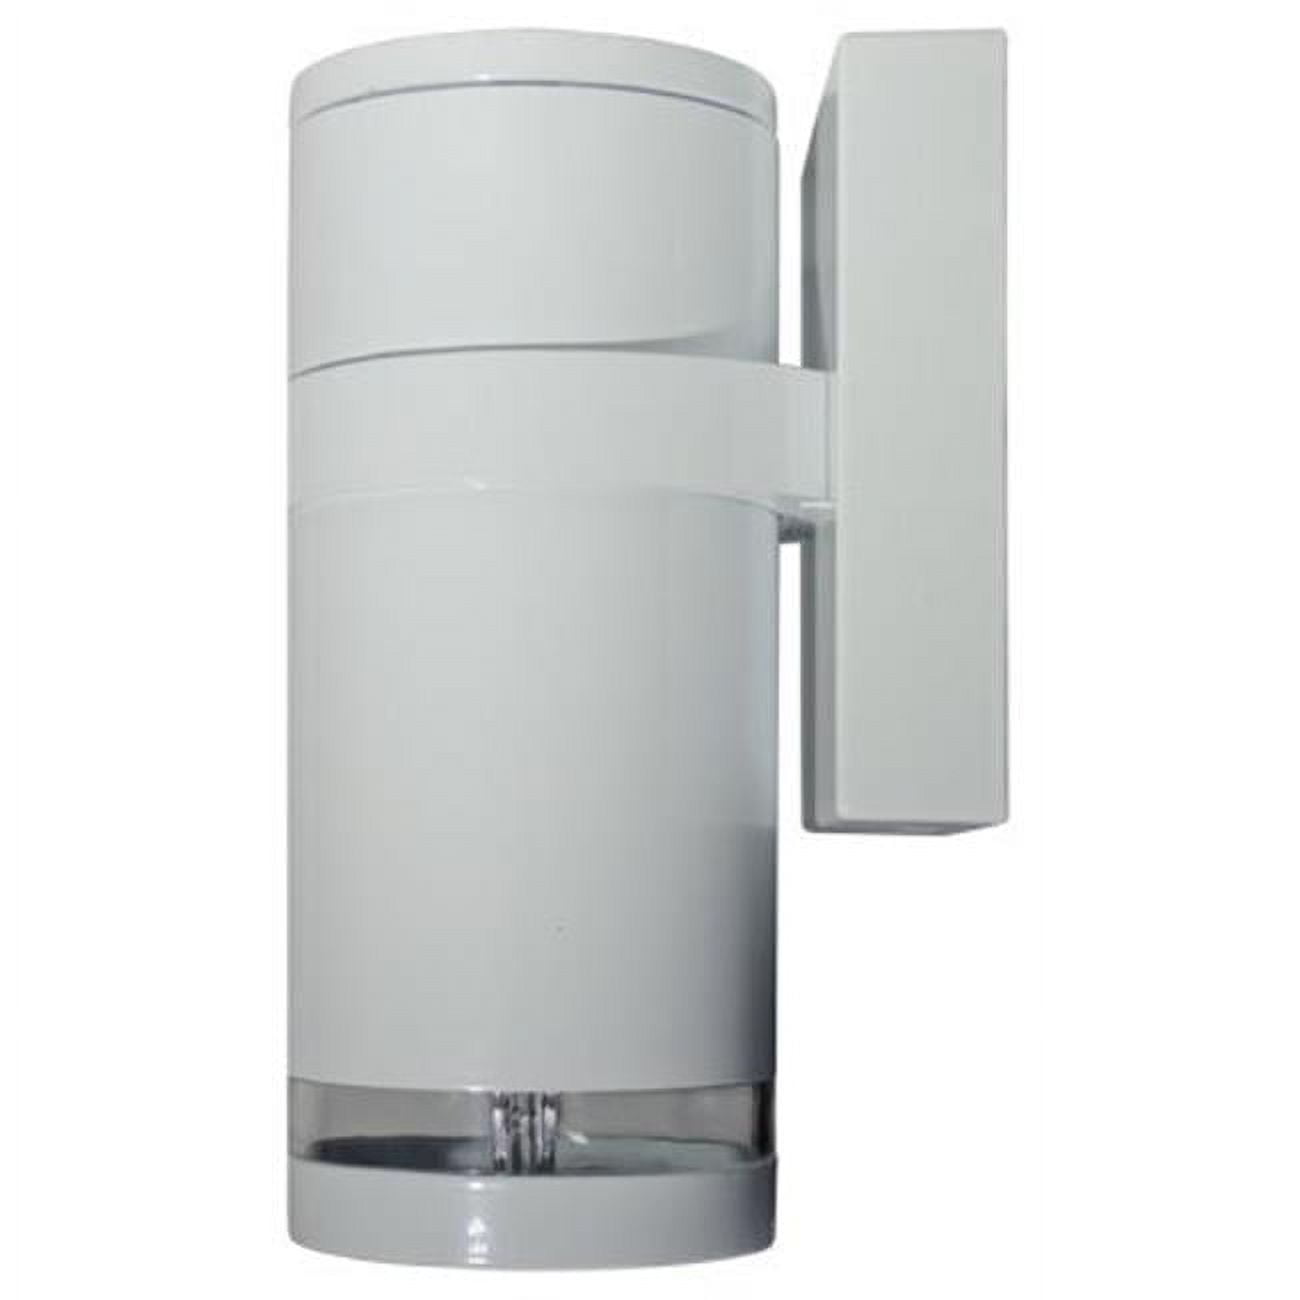 Dw3550-w Powder Coated Cast Aluminum Down Light Wall Fixture, White - 9.22 X 3.94 X 5.55 In.